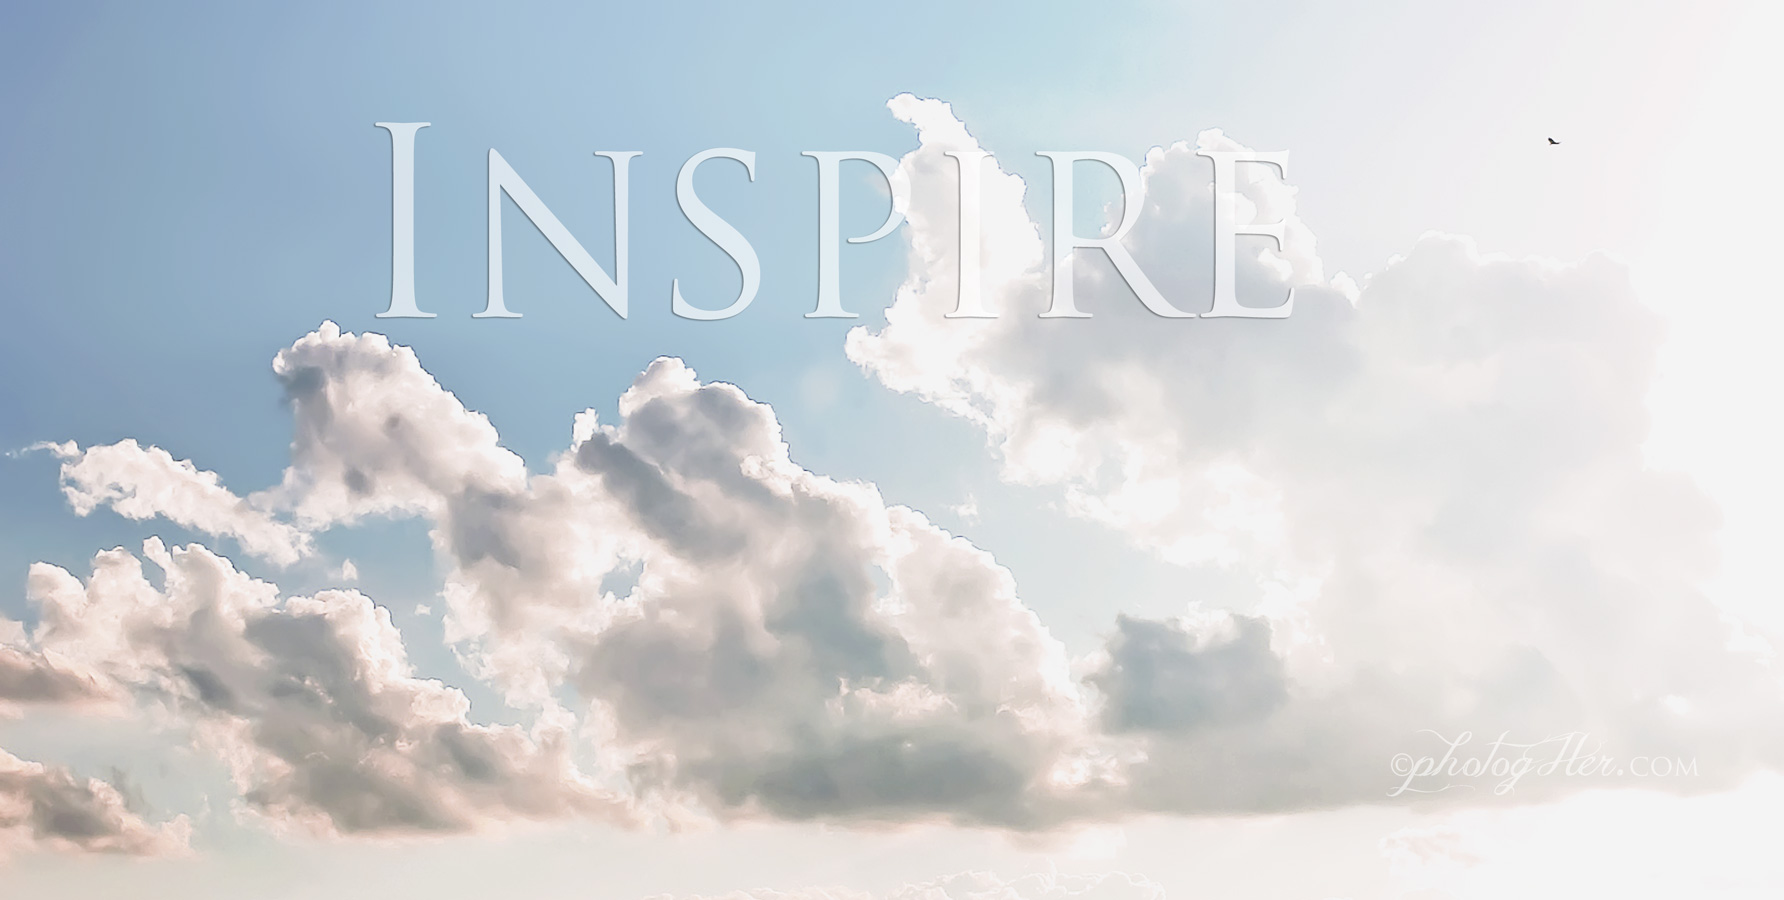 Inspire, Dream, 365 project, Chandra Achberger, i@photogher.com